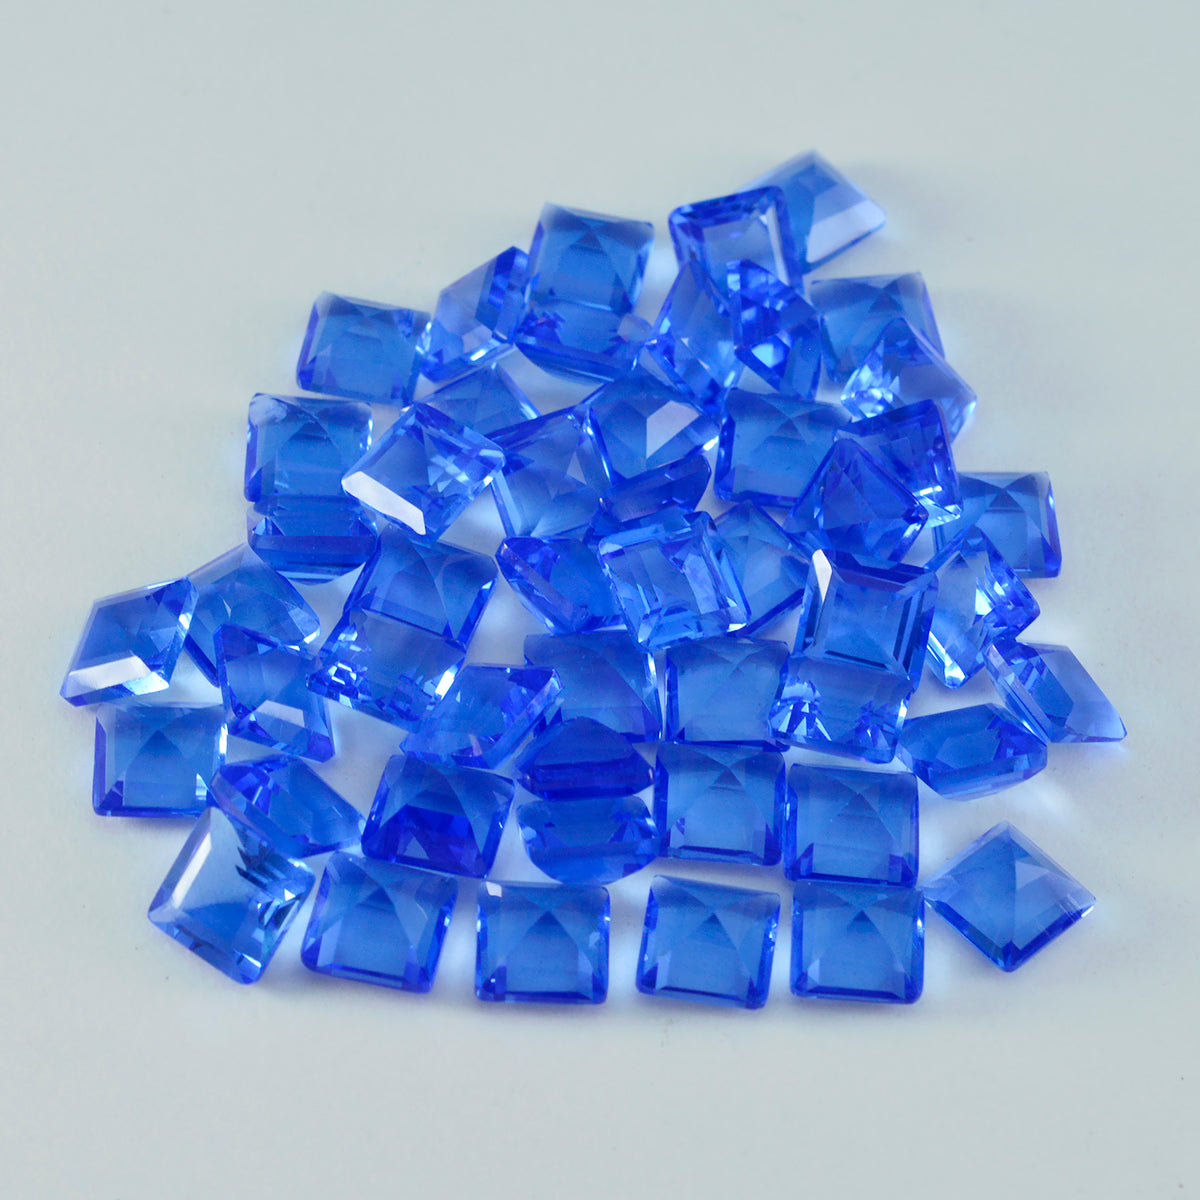 Riyogems 1 pieza zafiro azul CZ facetado 8x8 mm forma cuadrada piedra de calidad atractiva